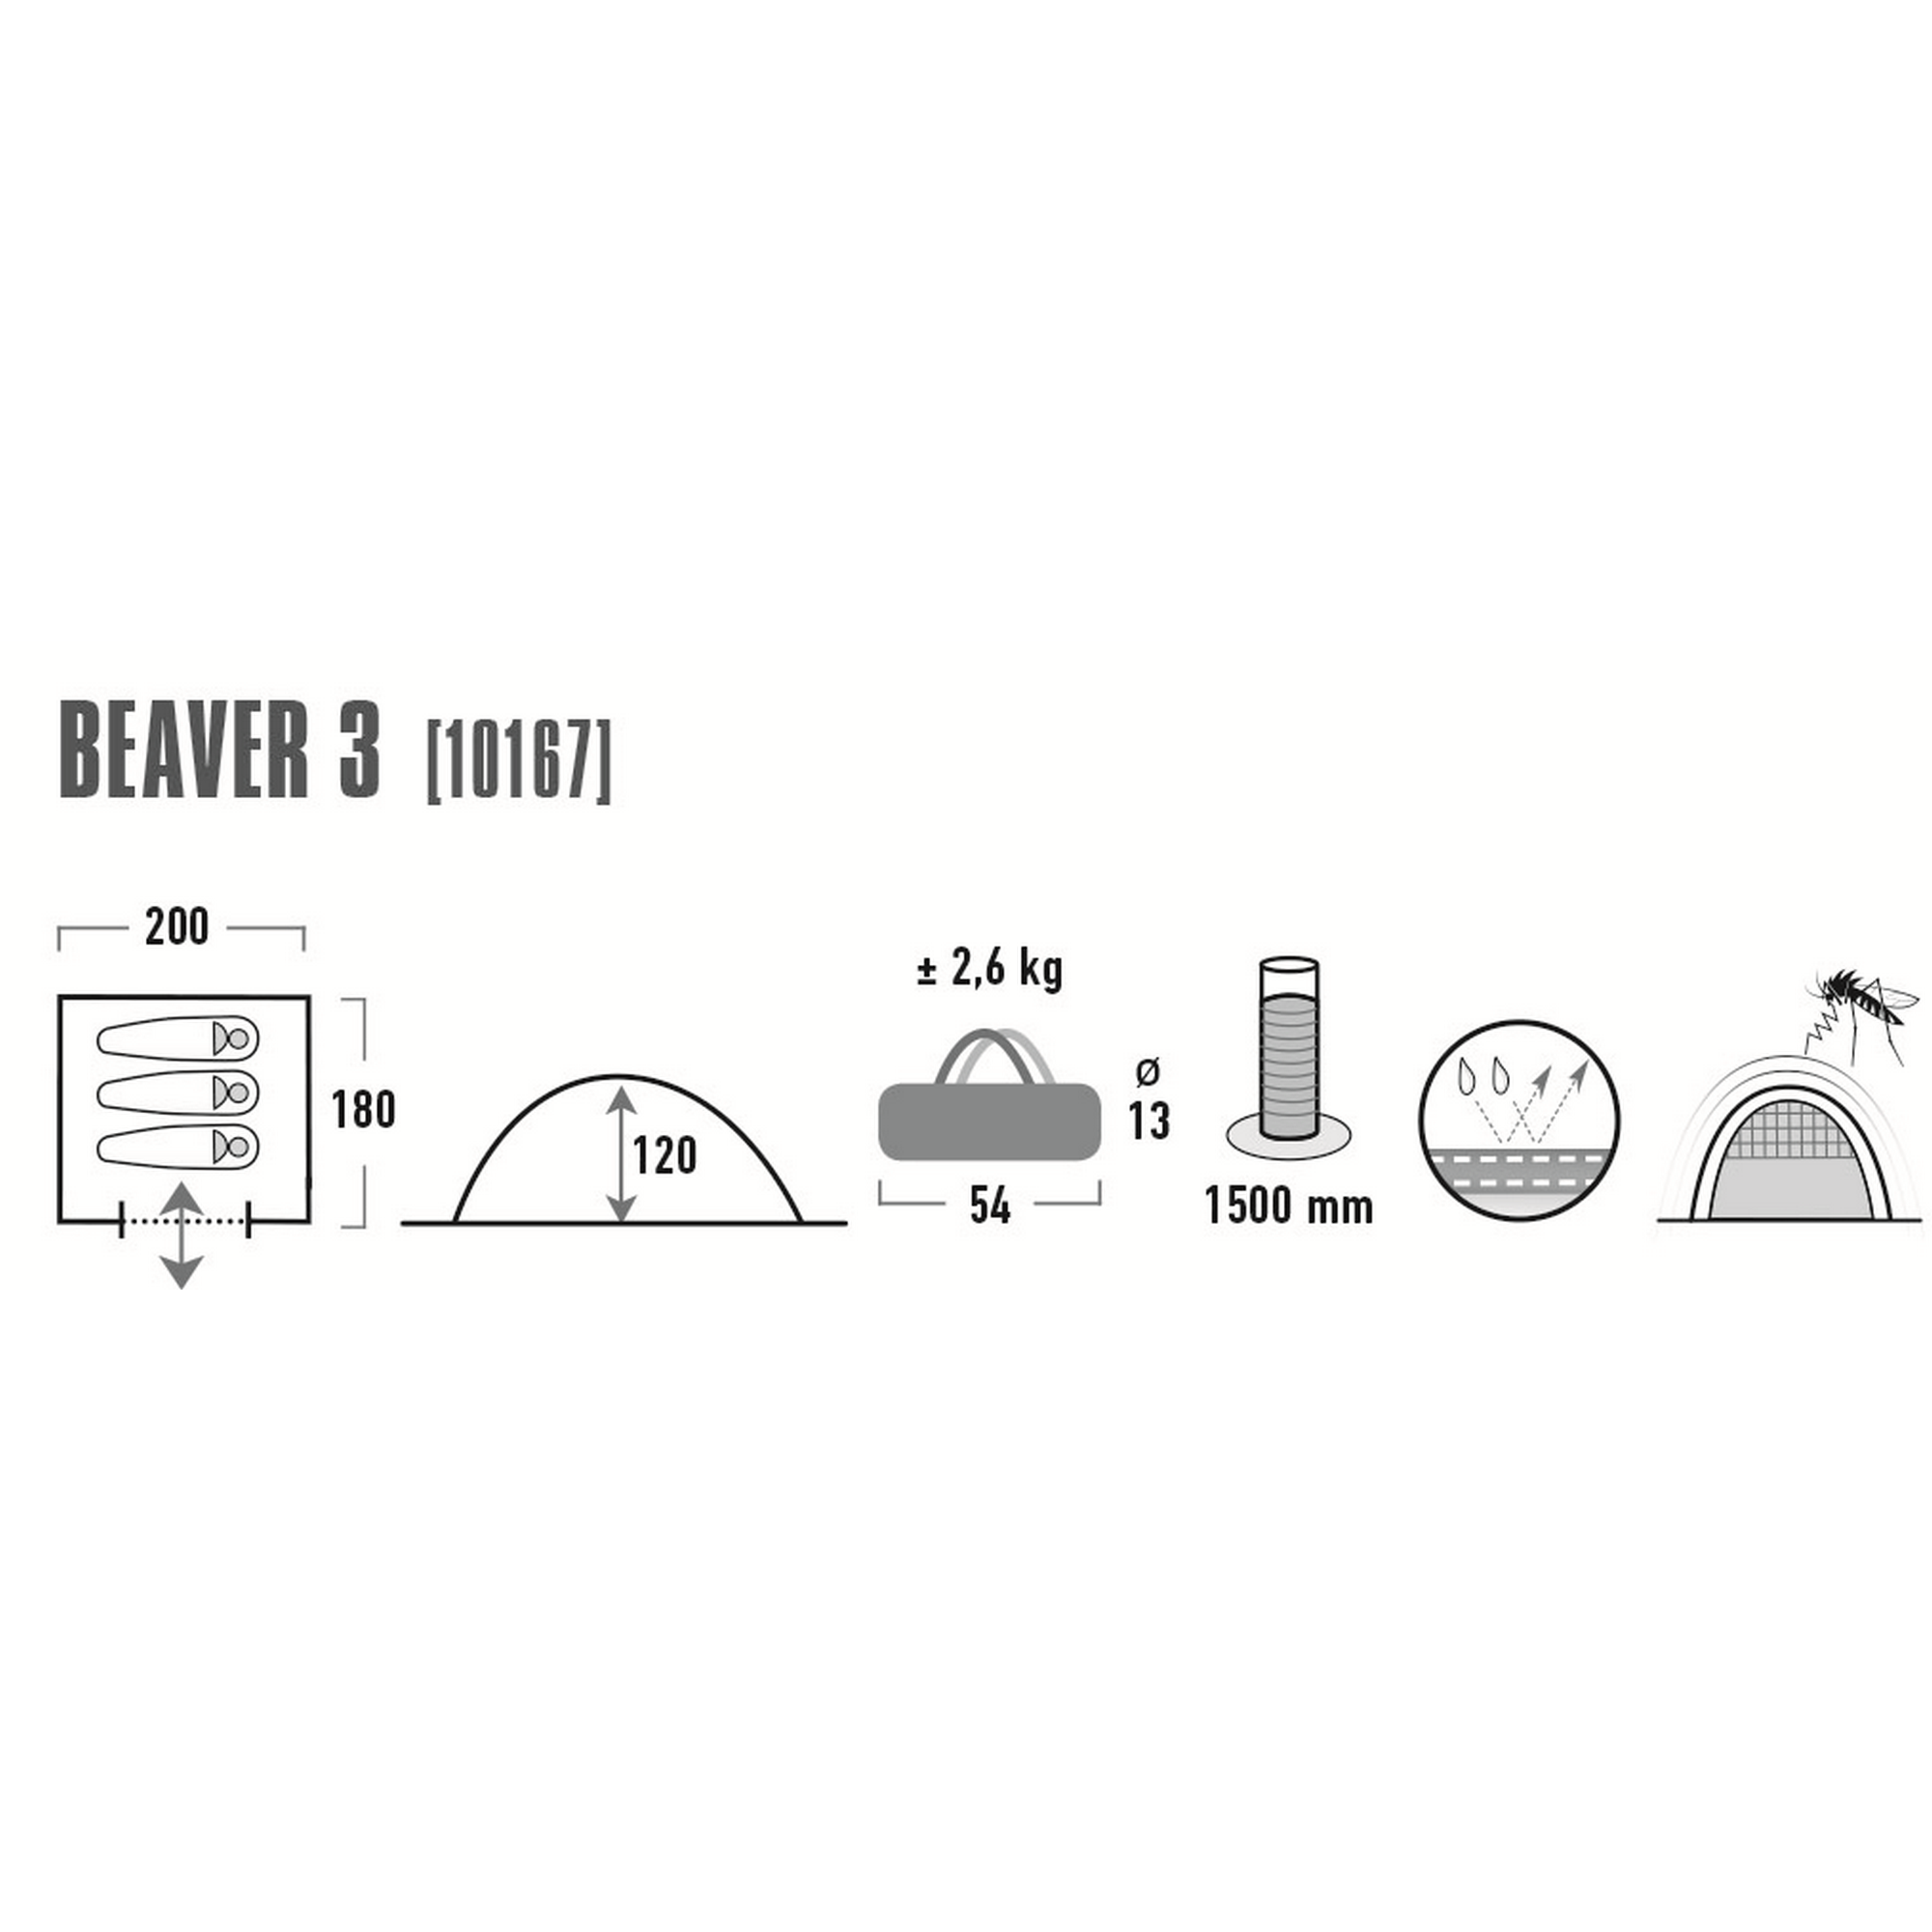 Zelt Beaver 3 + product picture